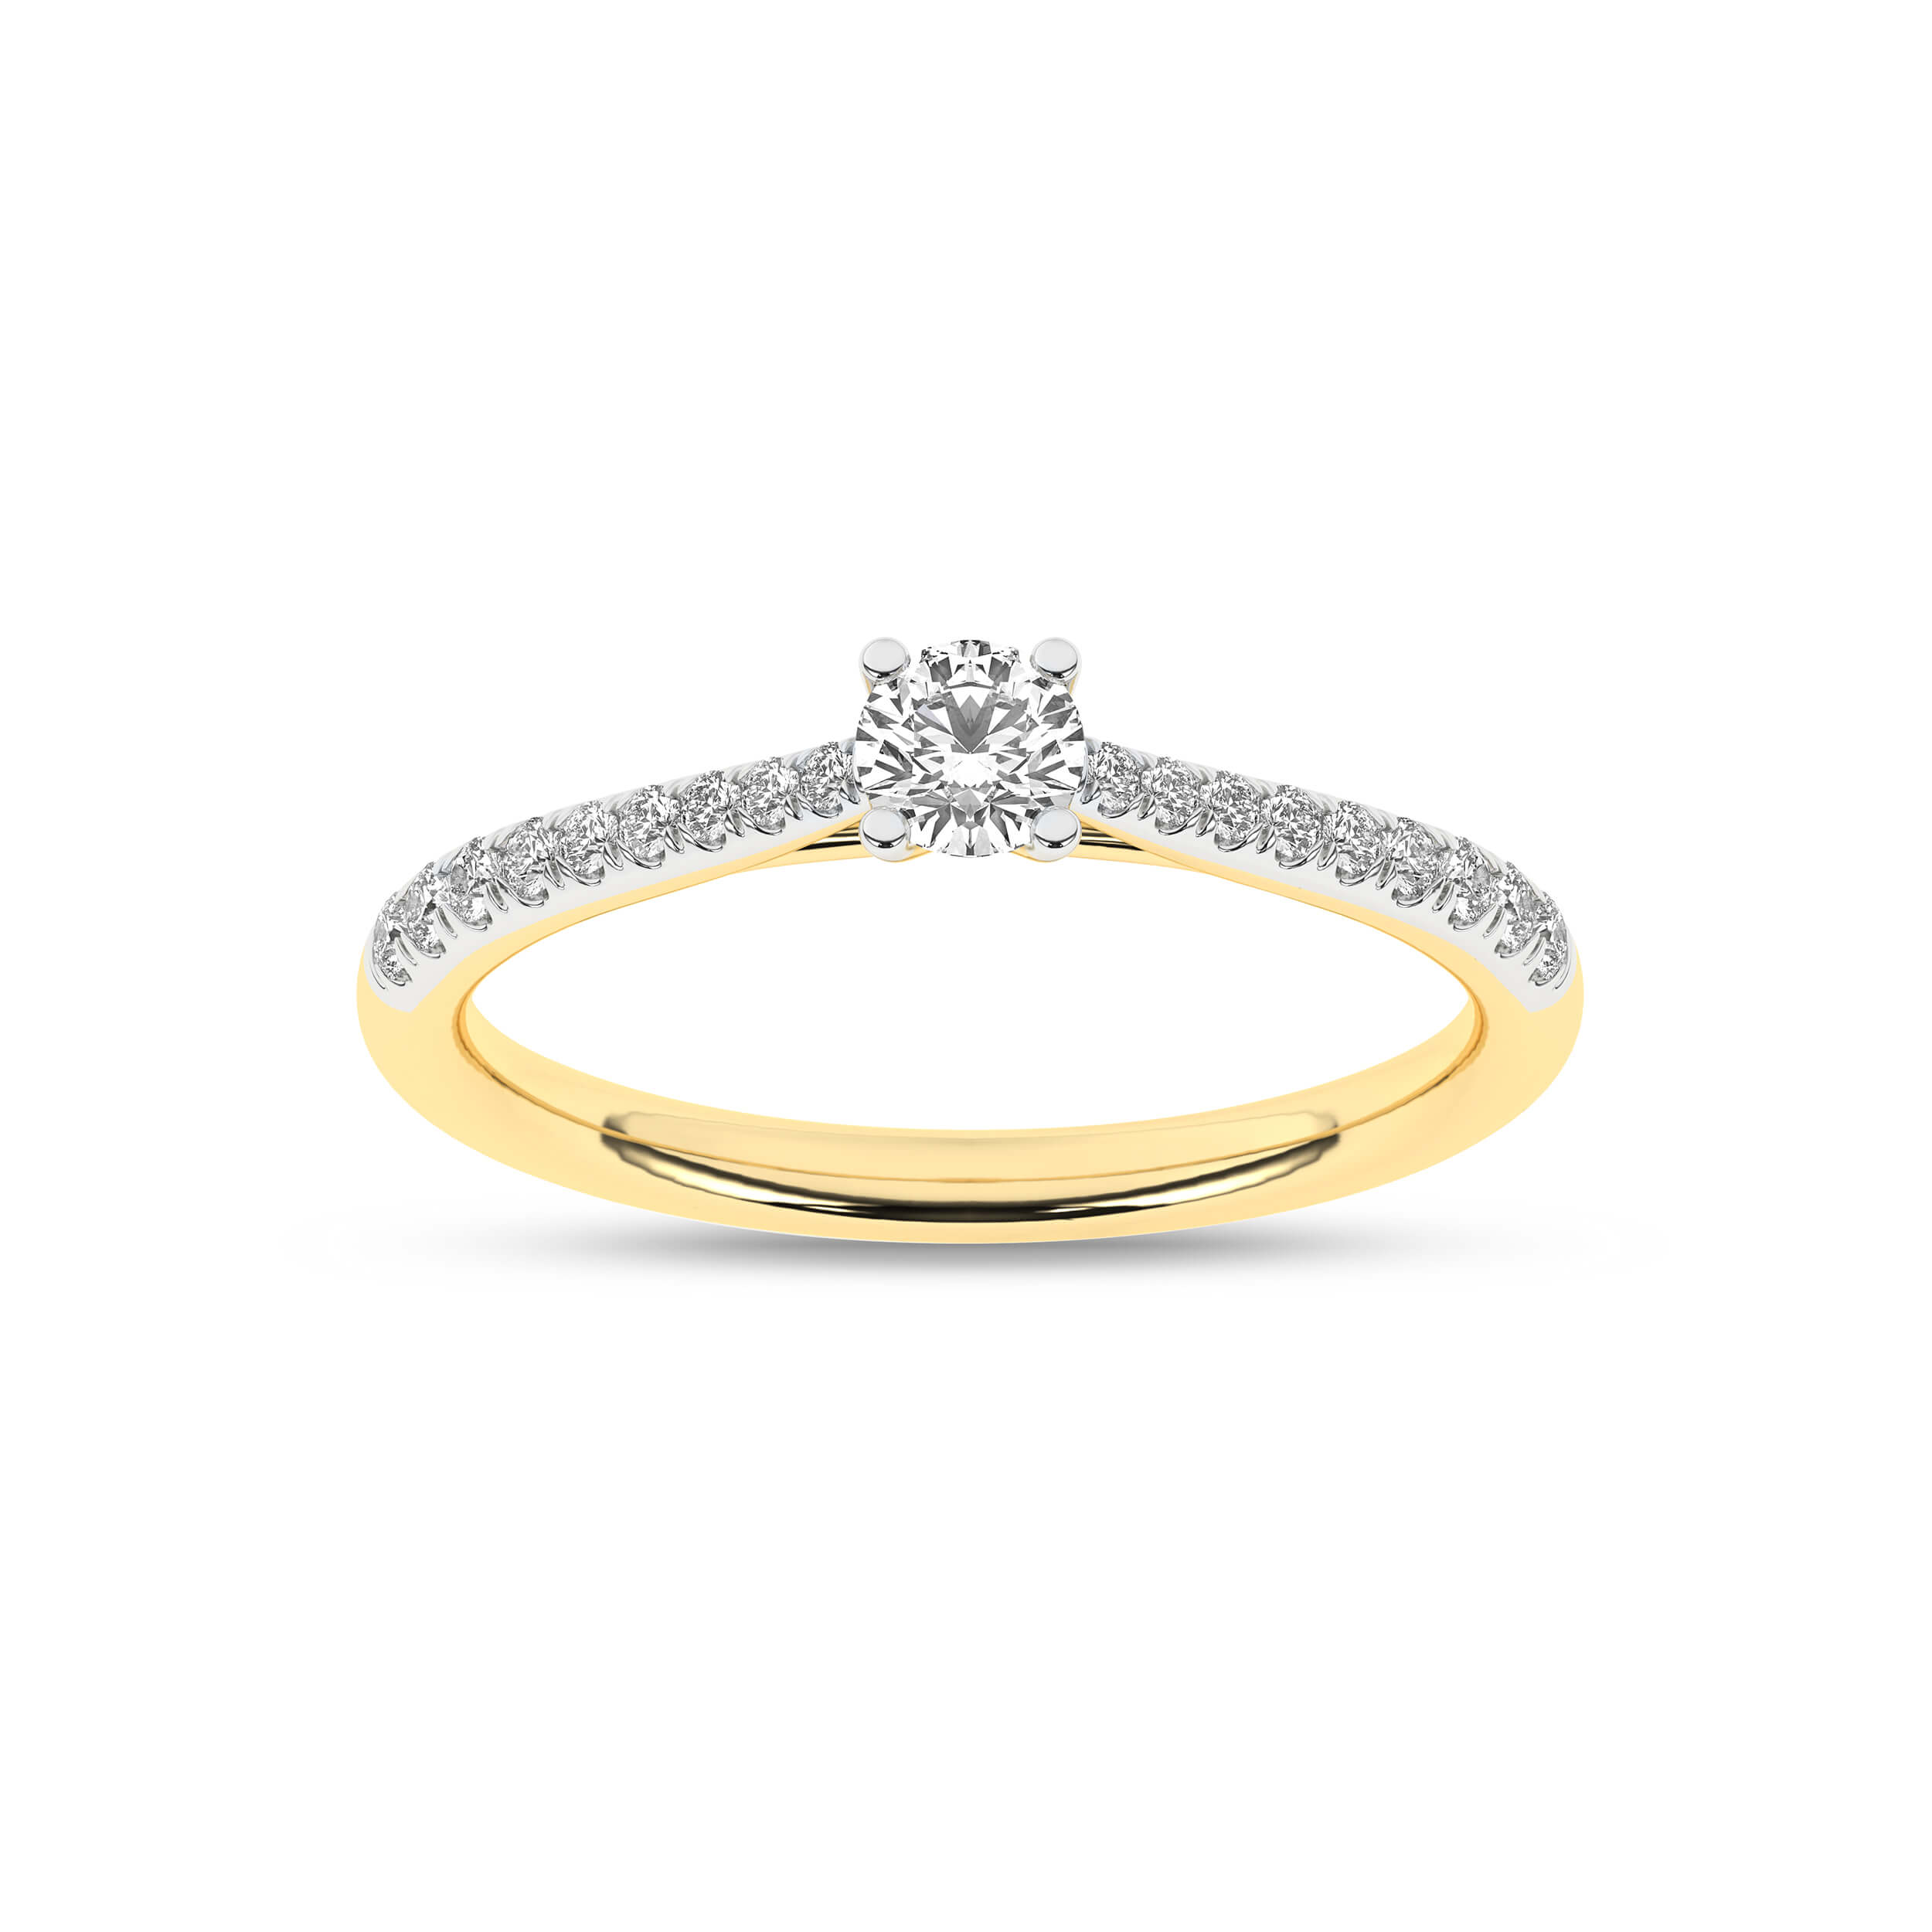 Inel de logodna din Aur Galben 14K cu Diamante 0.33Ct, articol RB21737EG, previzualizare foto 3